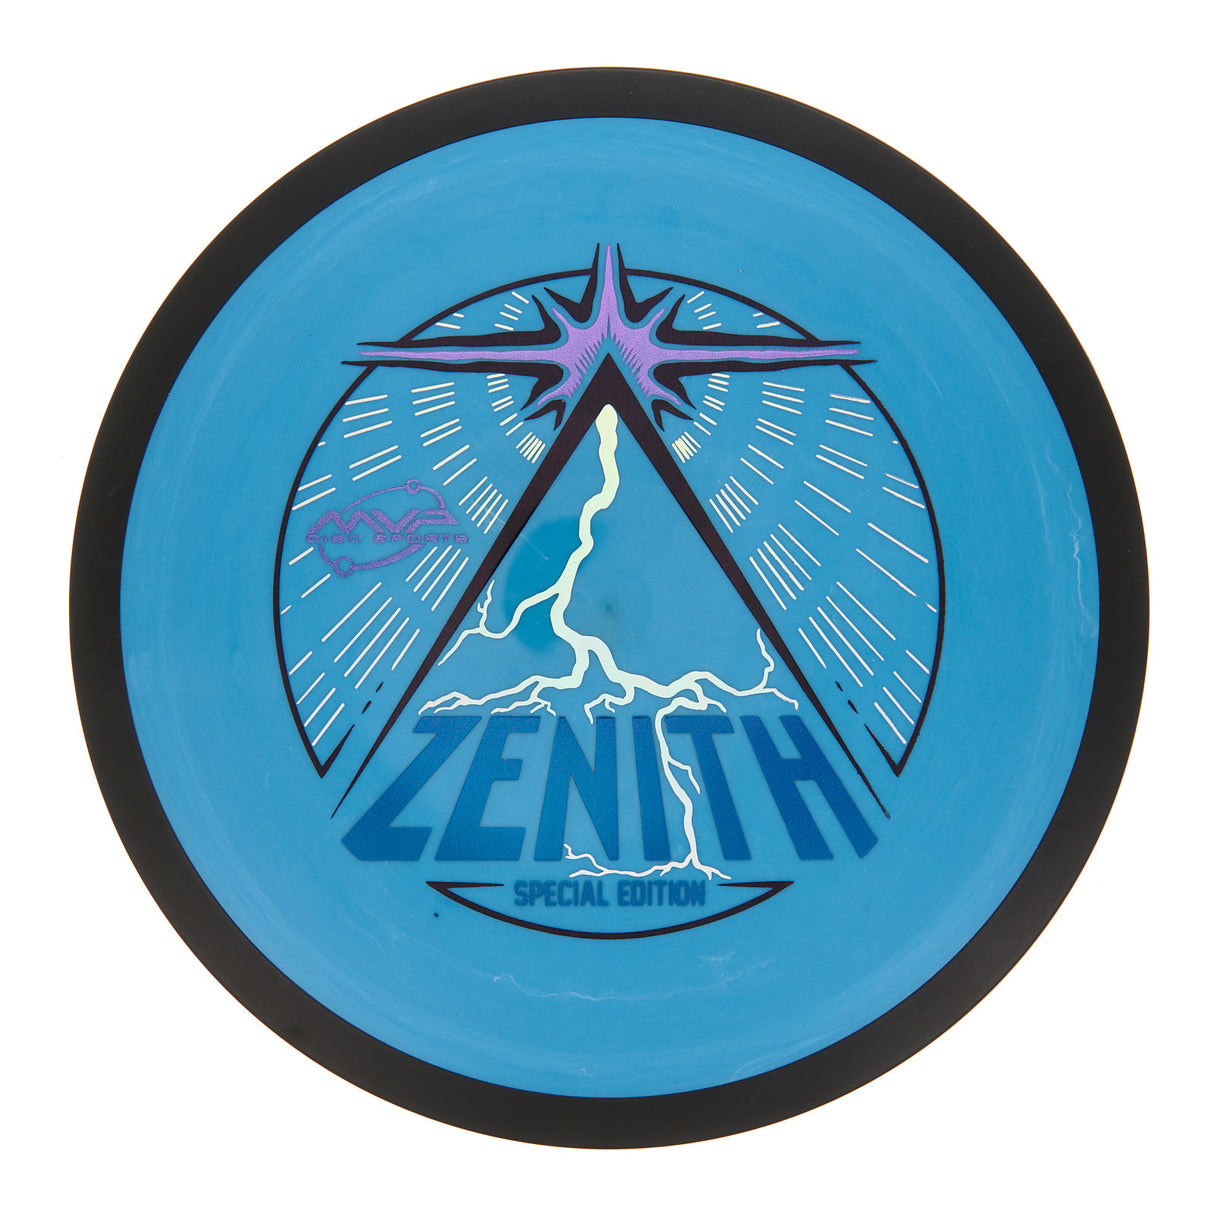 MVP Zenith - Neutron Special Edition 171g | Style 0001